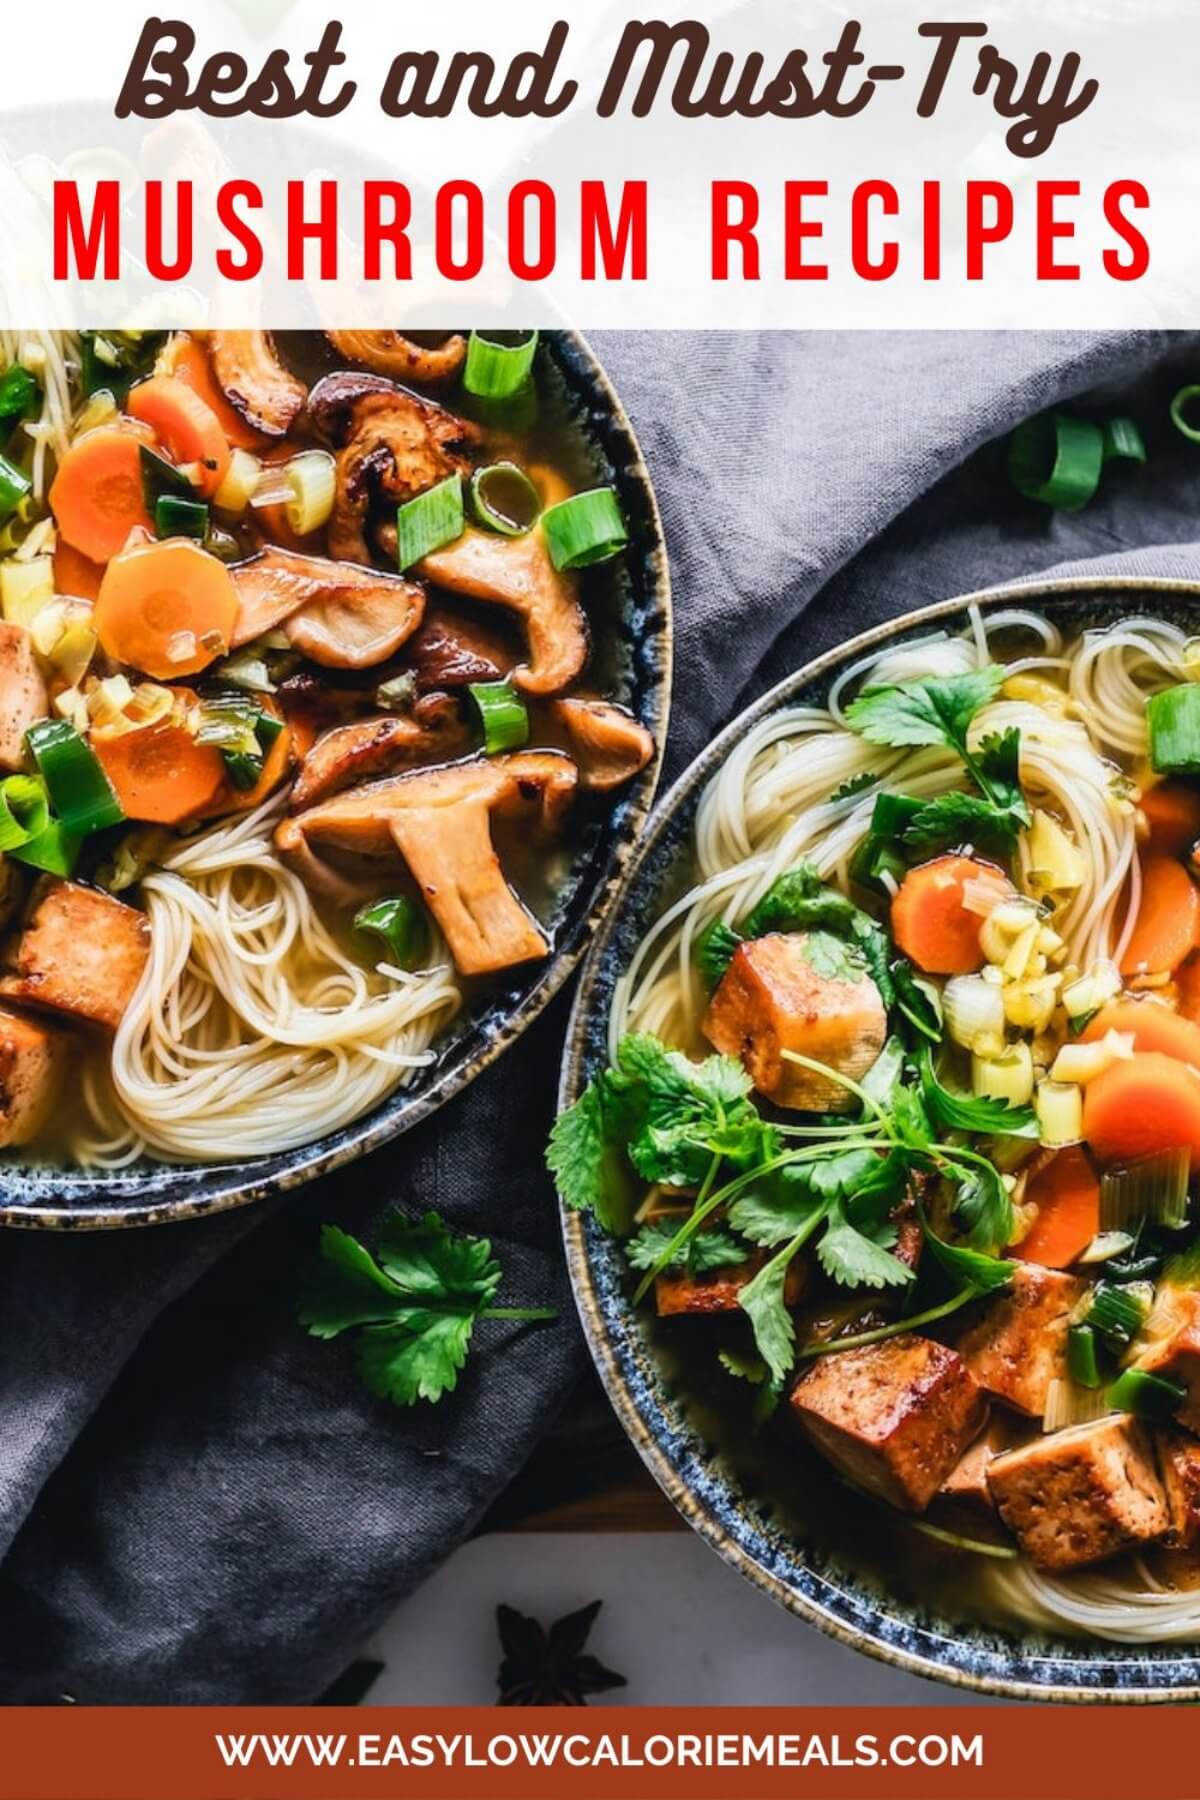 Mushroom soup noodle salad along with tofu and vegetables served in black bowls.